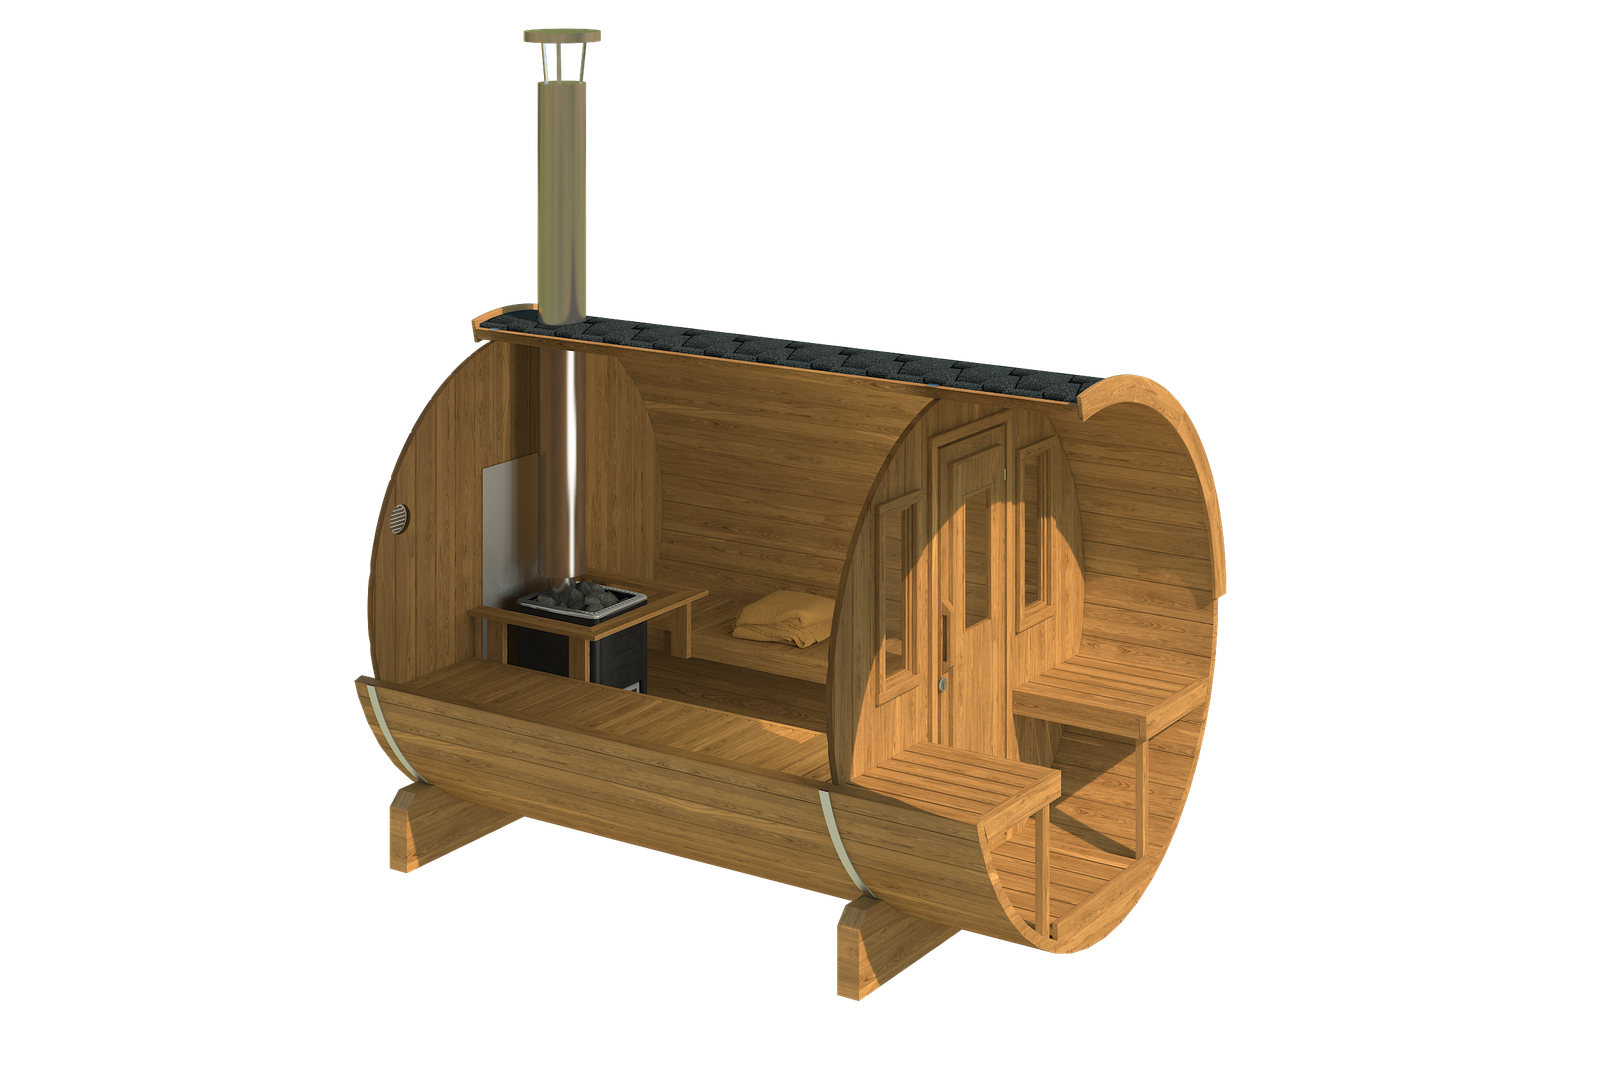 Vanjska sauna 250 Thermowood (4 osobe)